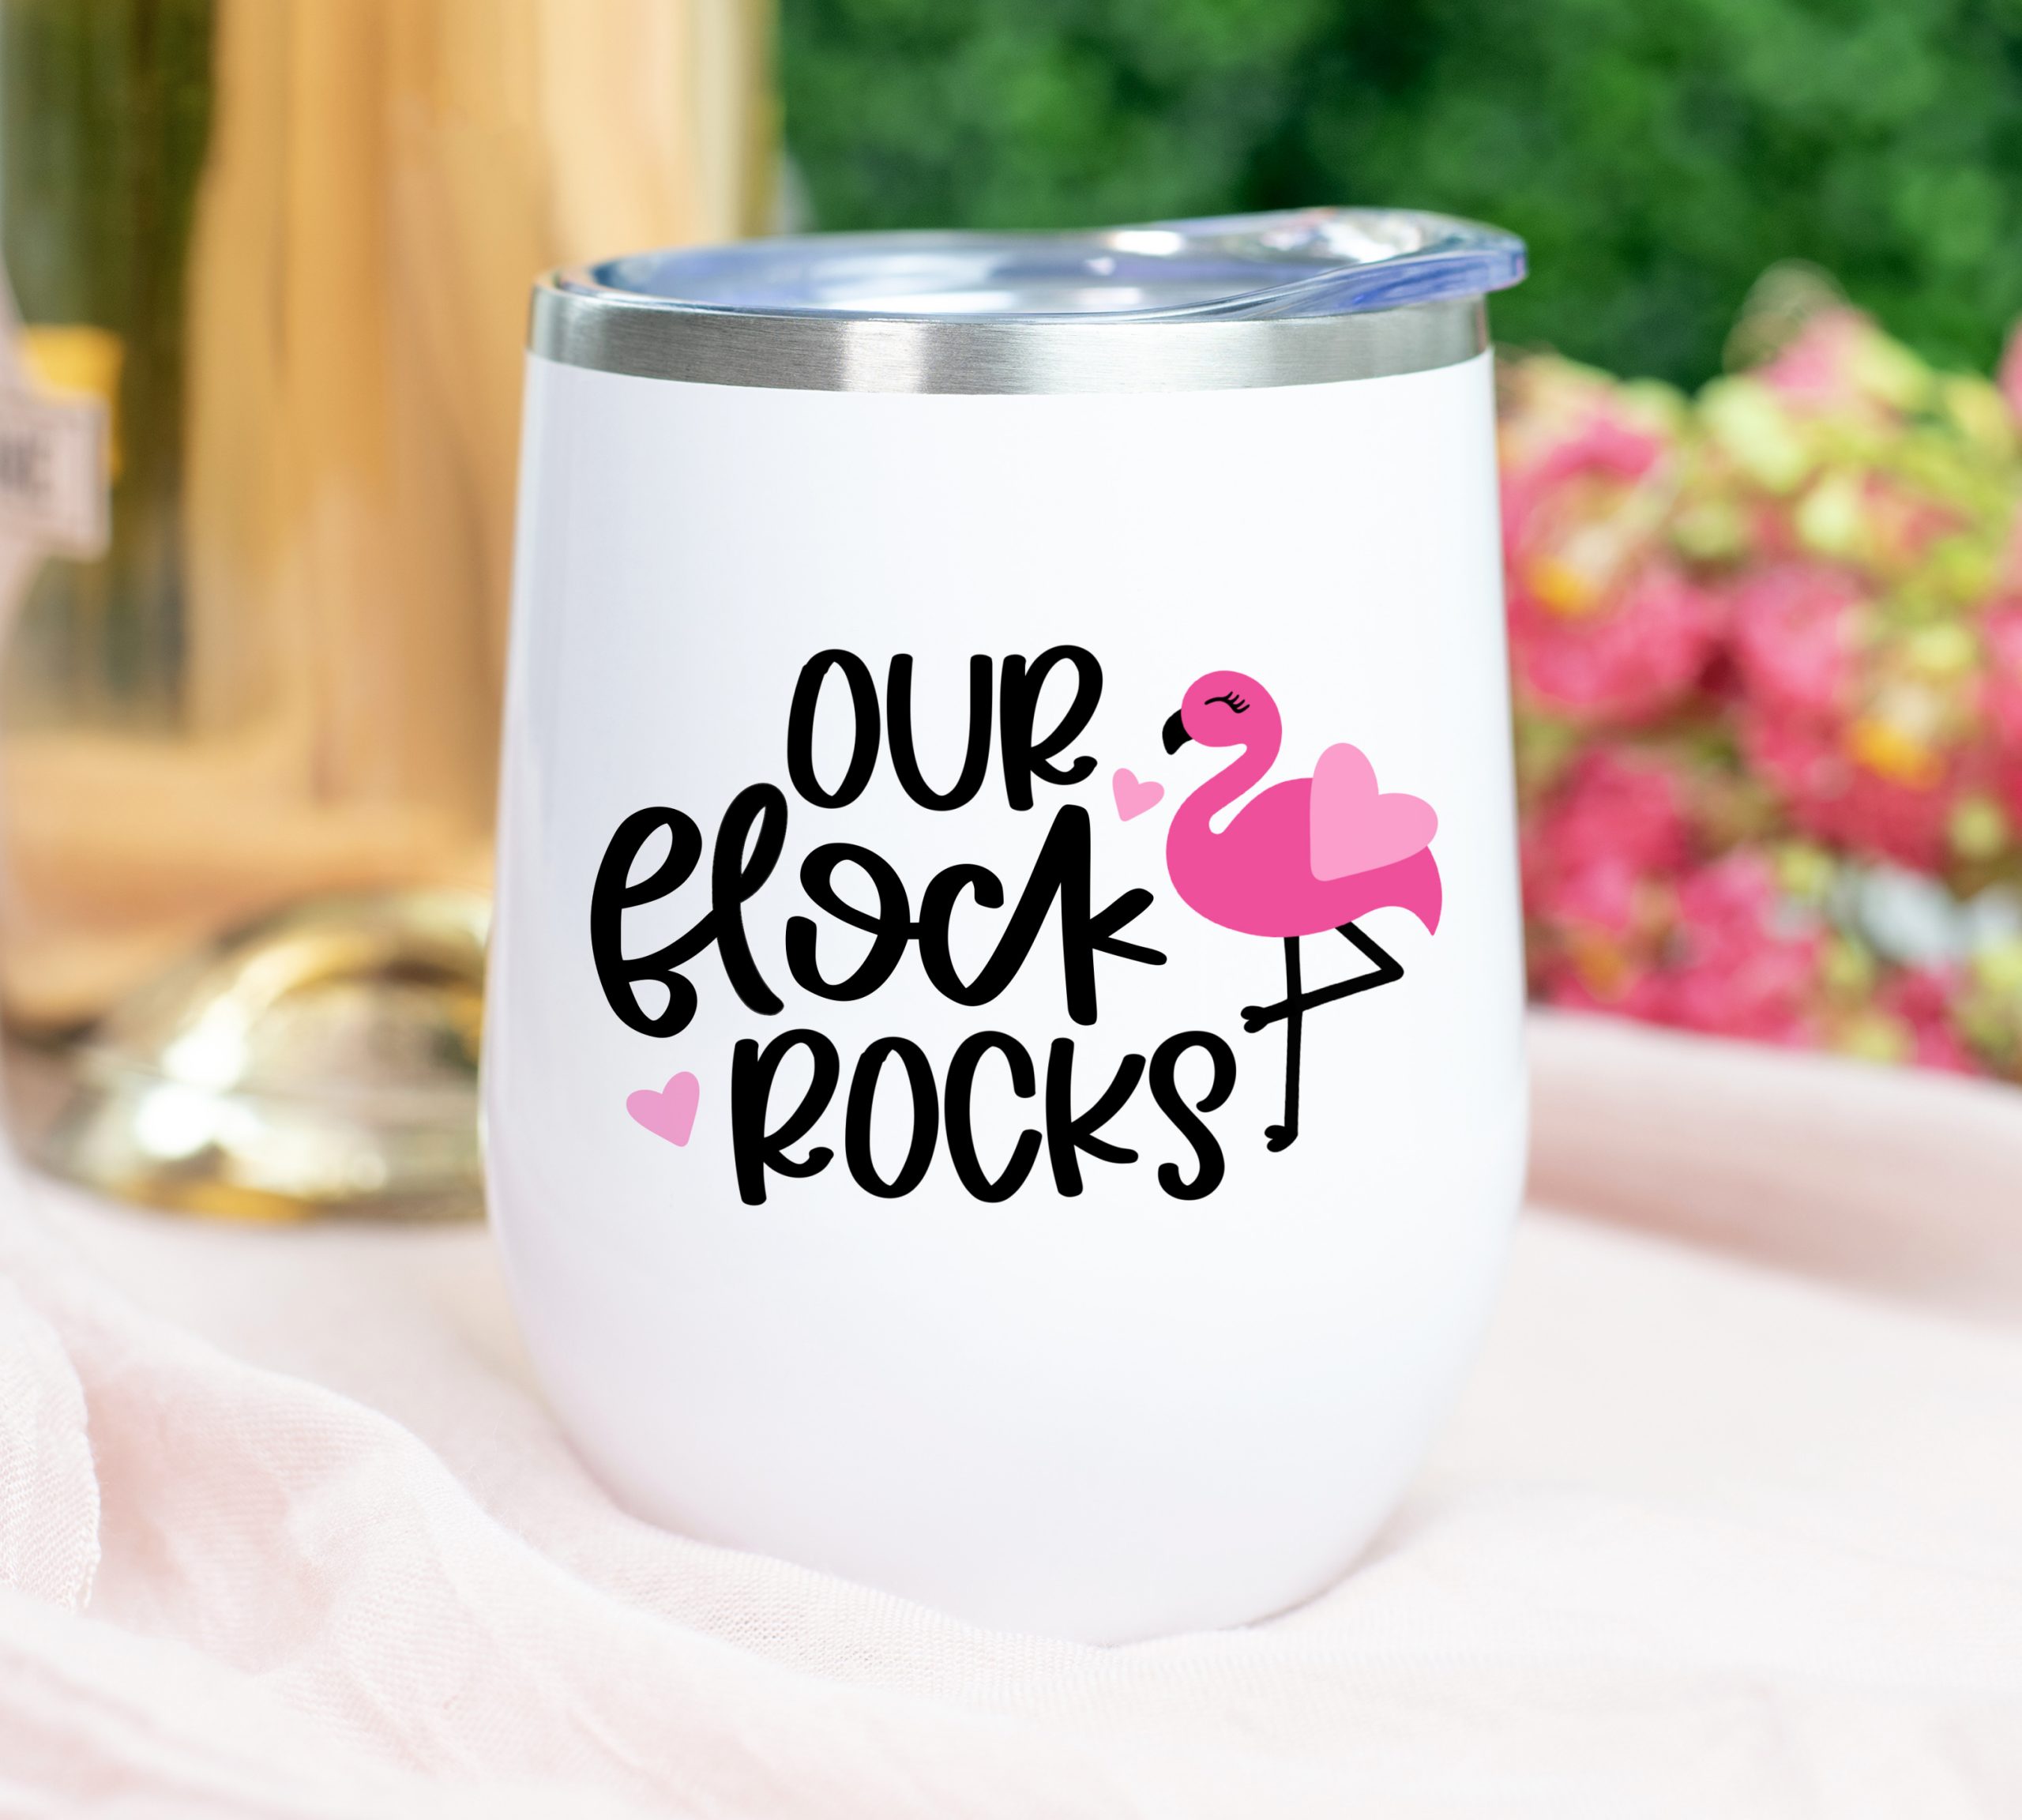 Flamingo SVG Collection - Our Flock Rocks SVG on wine tumbler